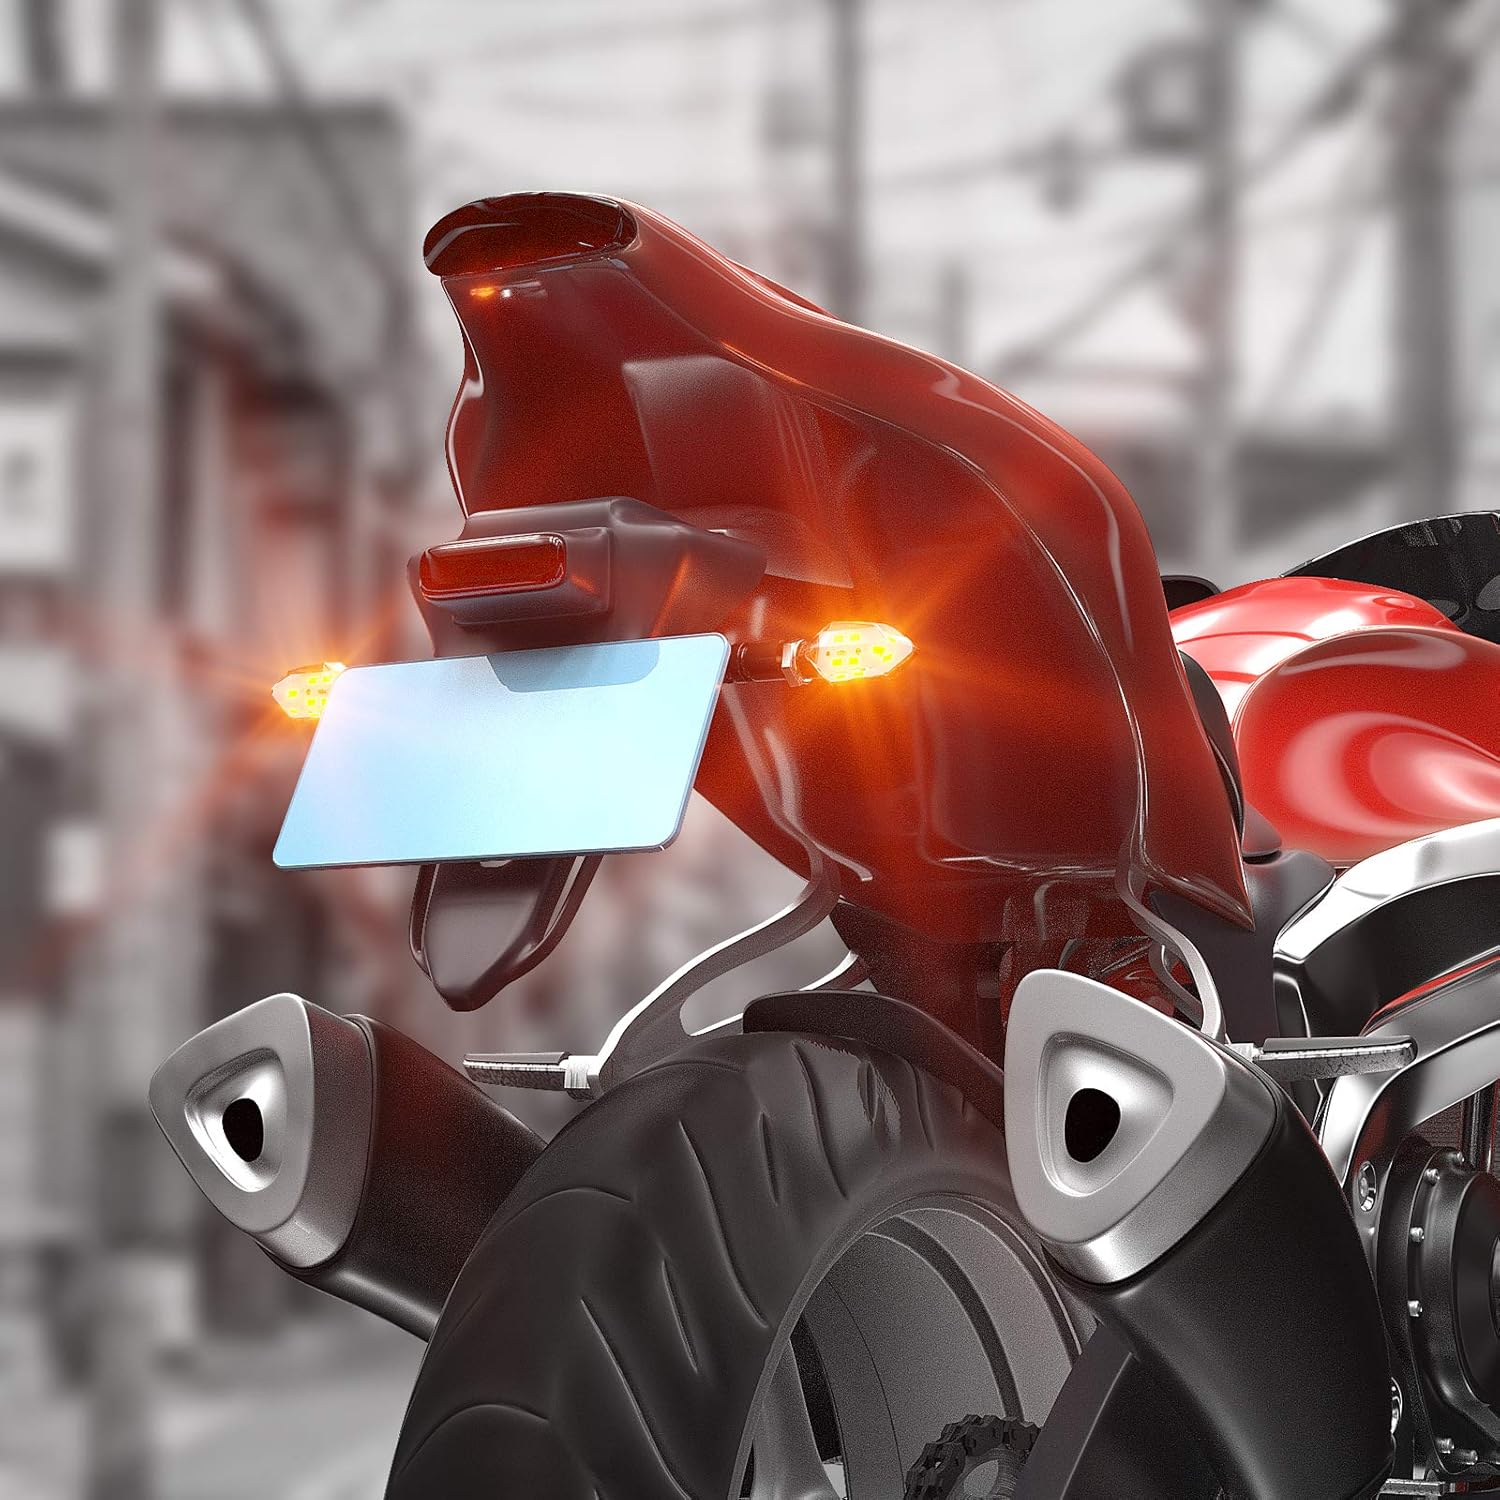 Tête de fourche FULL LED avec phares led pour moto - Creativ Garage